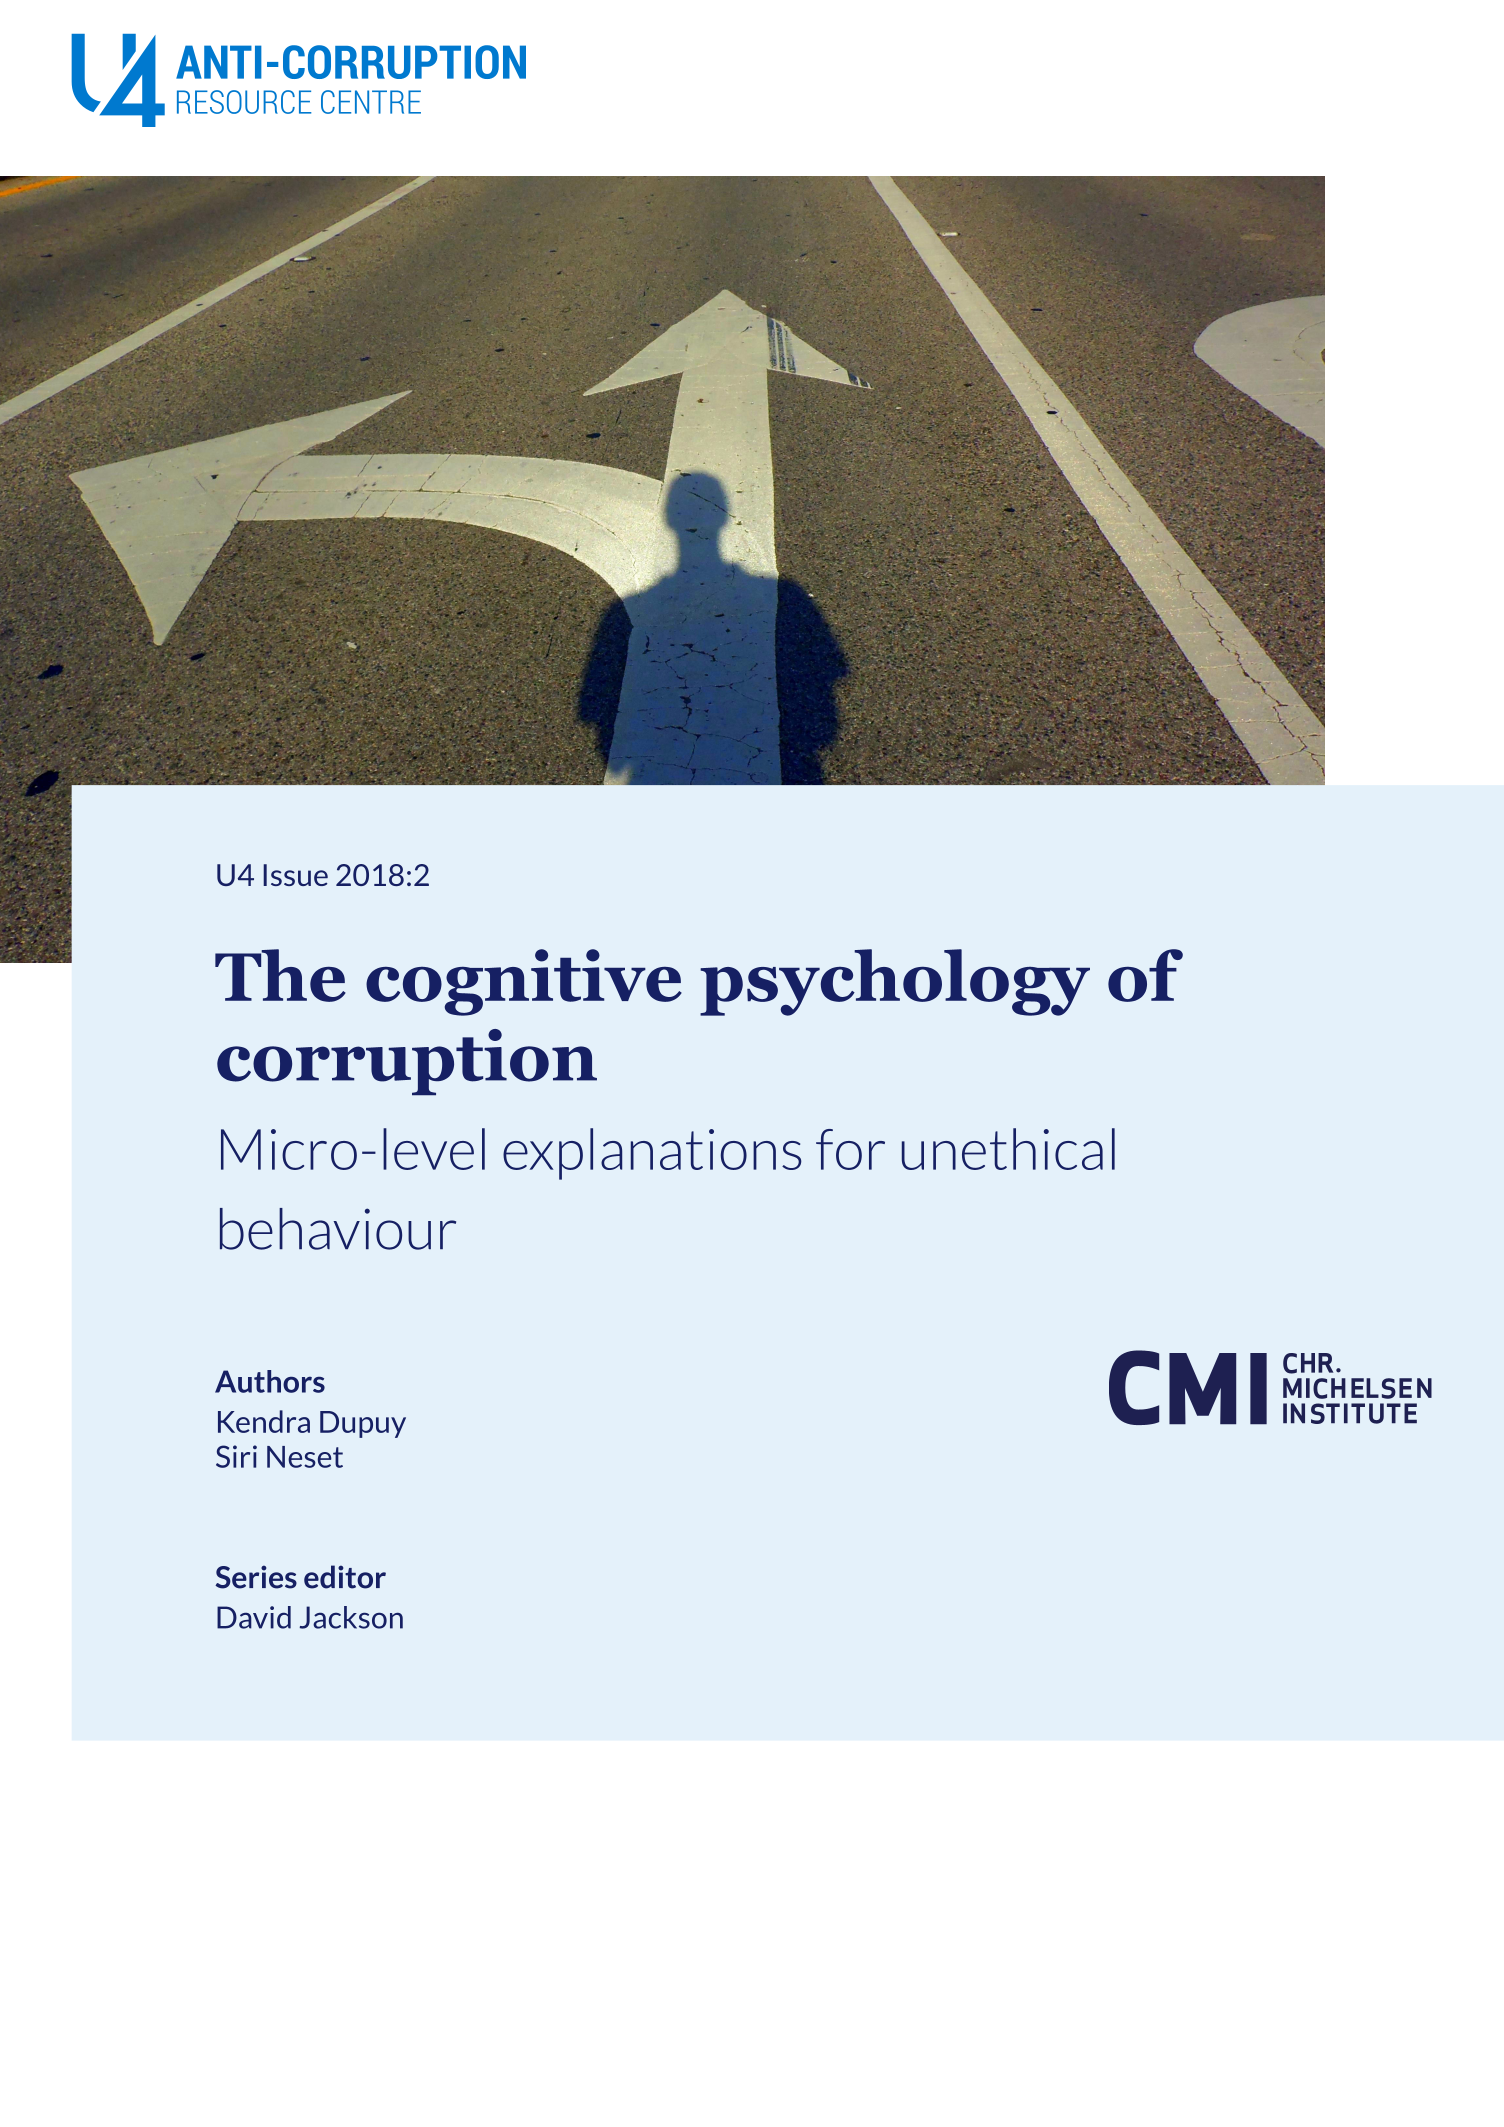 The cognitive psychology of corruption